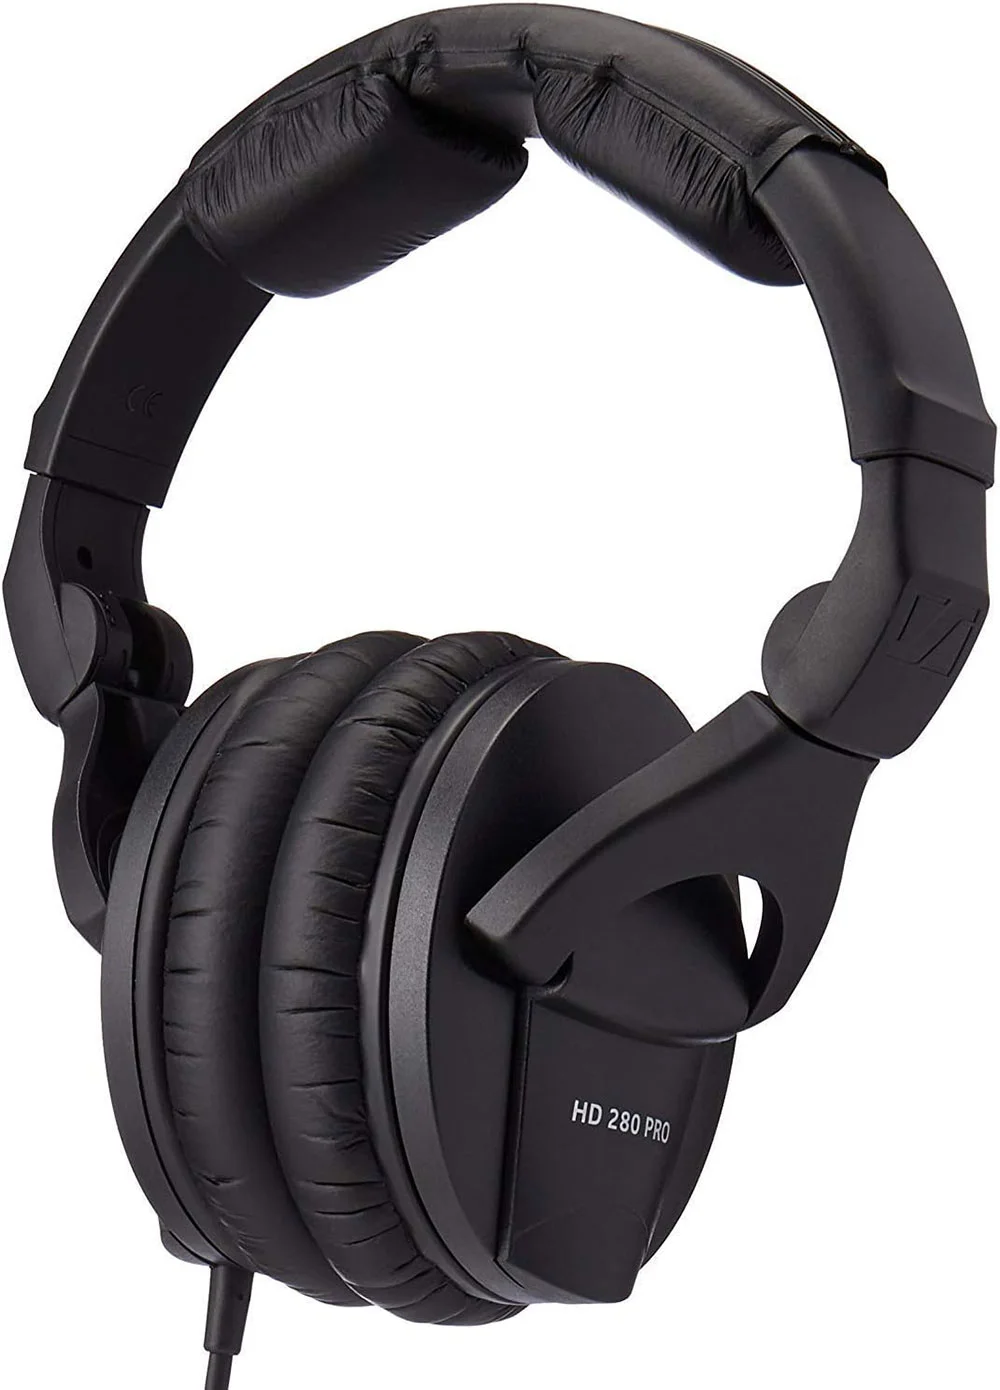 Sennheiser Professional HD 280 PRO Over-Ear Monitoring Headphones Review